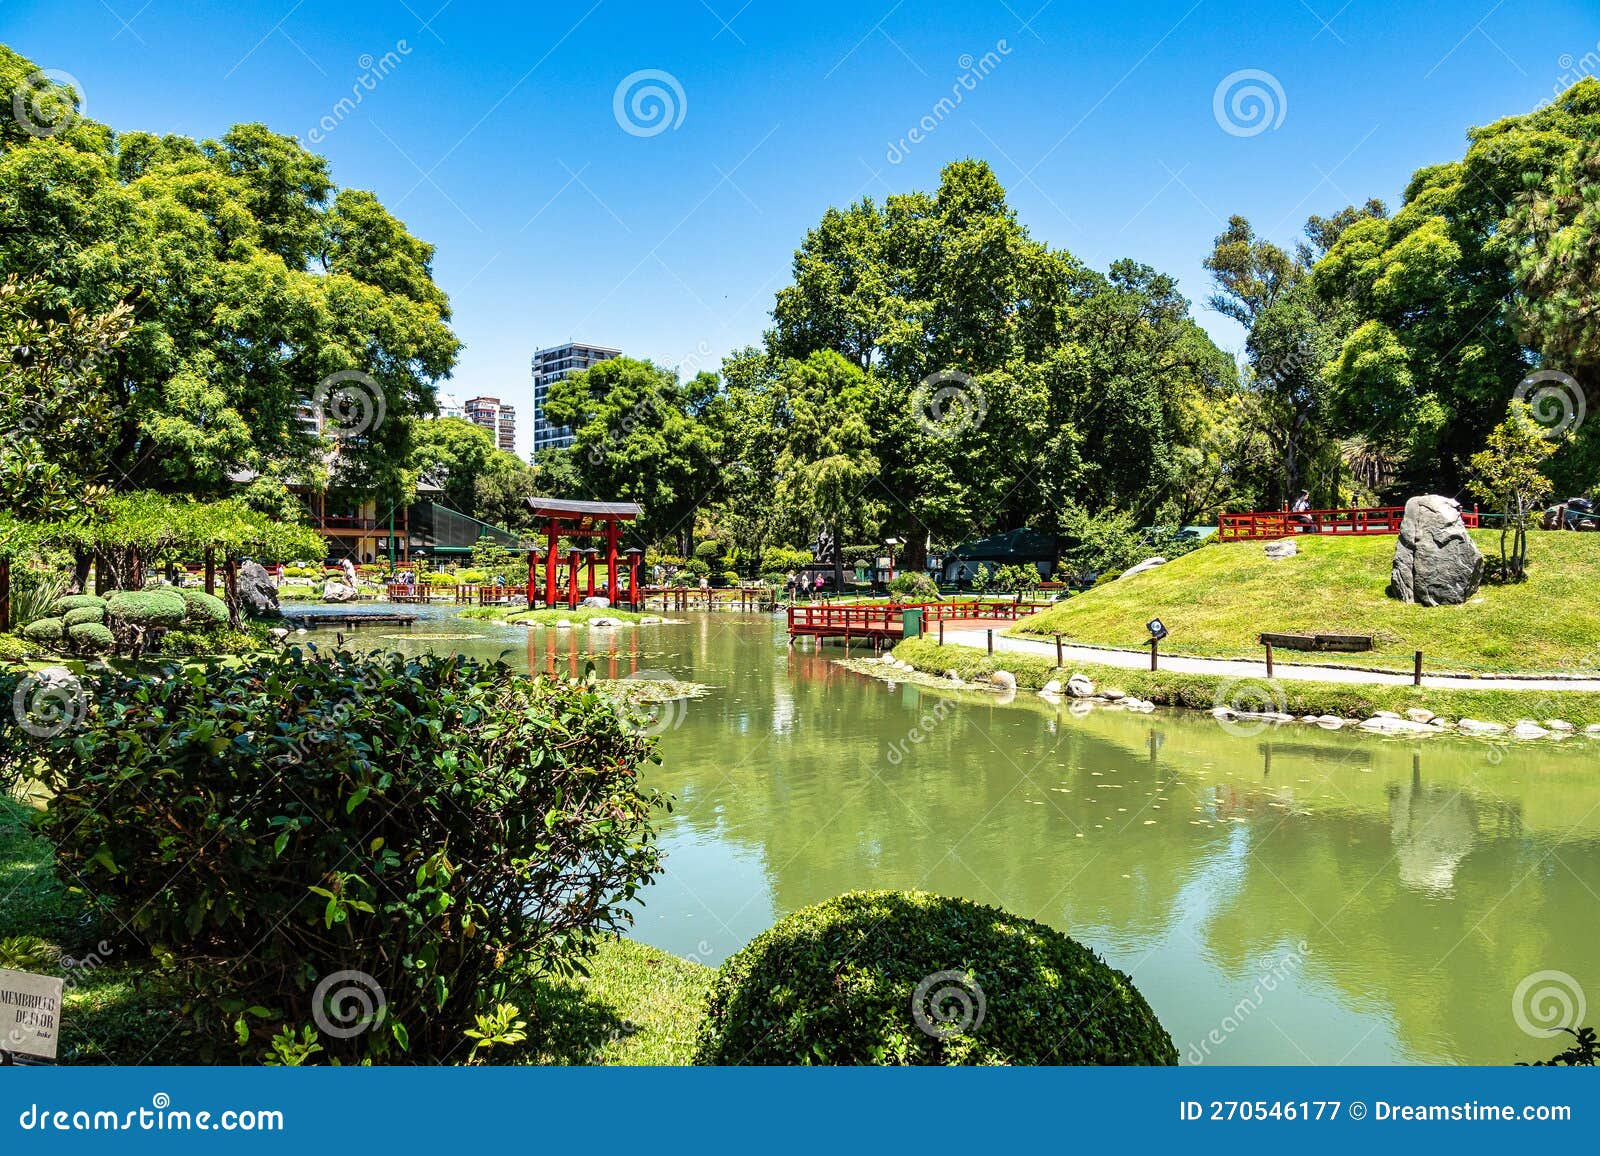 the buenos aires japanese garden, jardin japones is a public garden in buenos aires, argentina